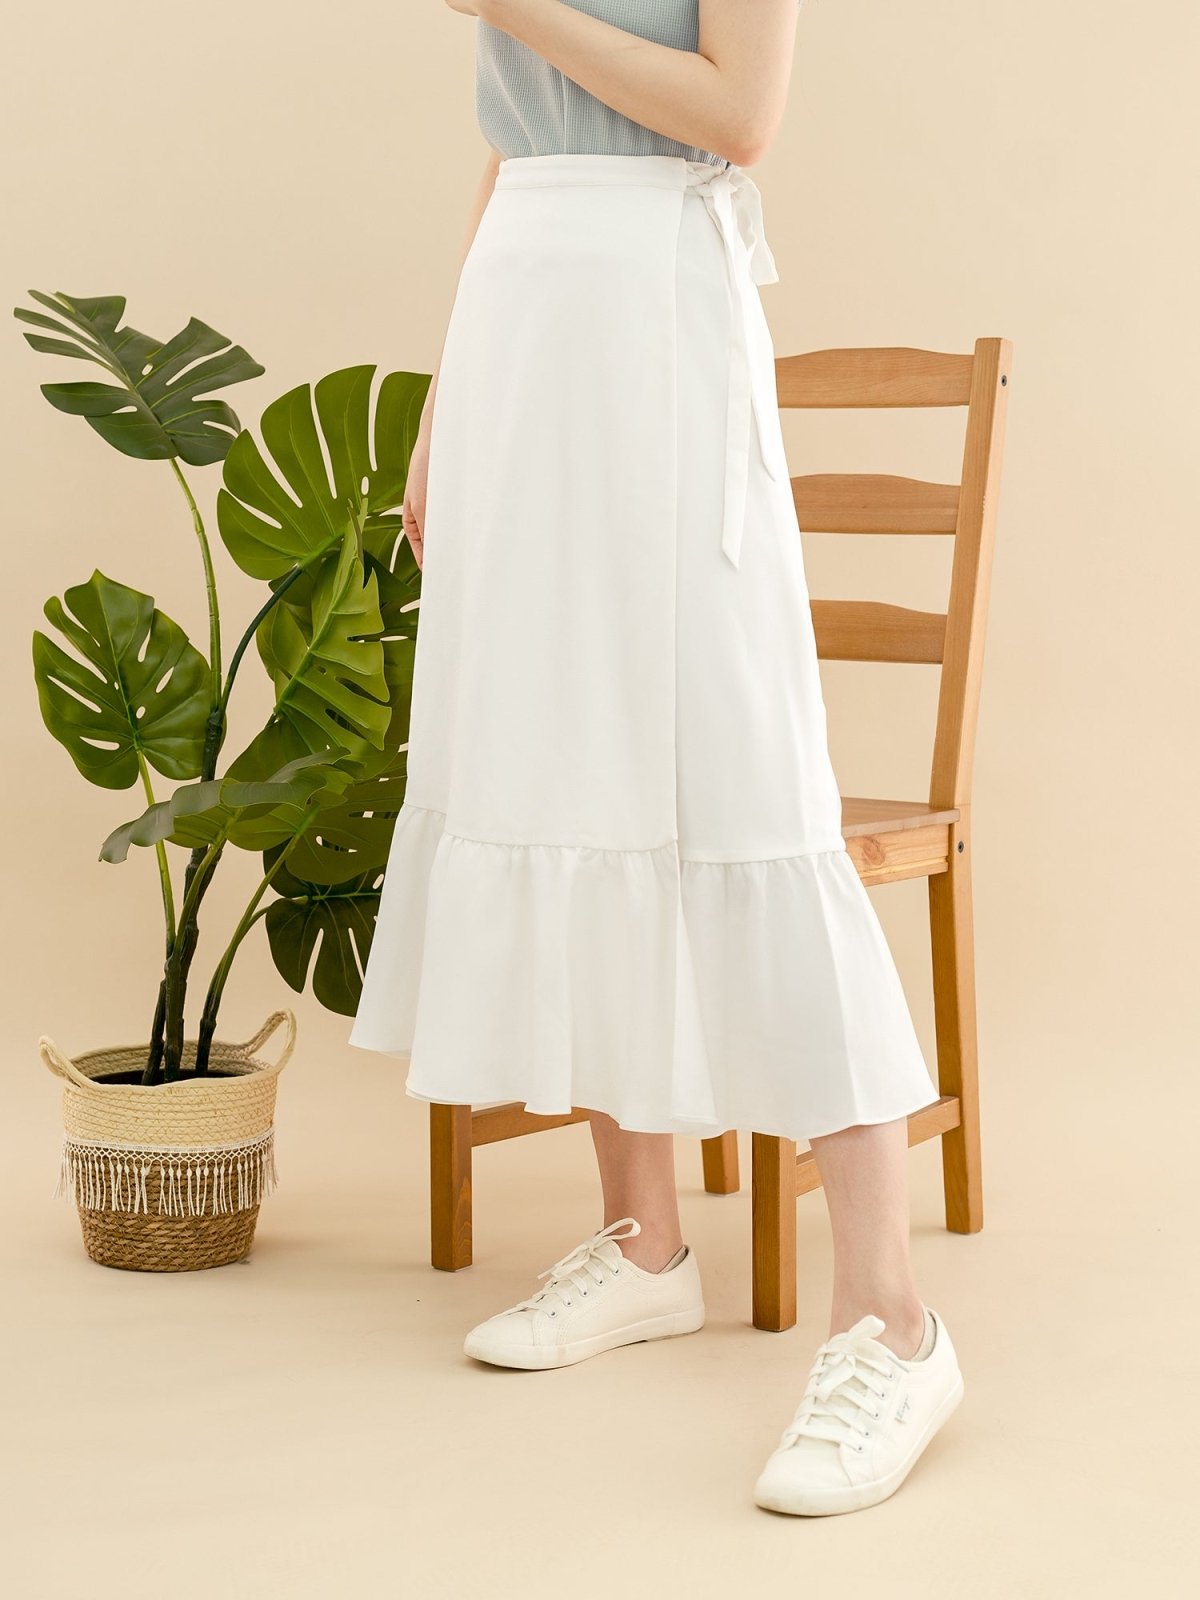 Wrap Midi Skirt WHITE - DAG-DD8721-21WhiteS - Mochi Ivory - S - D'zage Designs